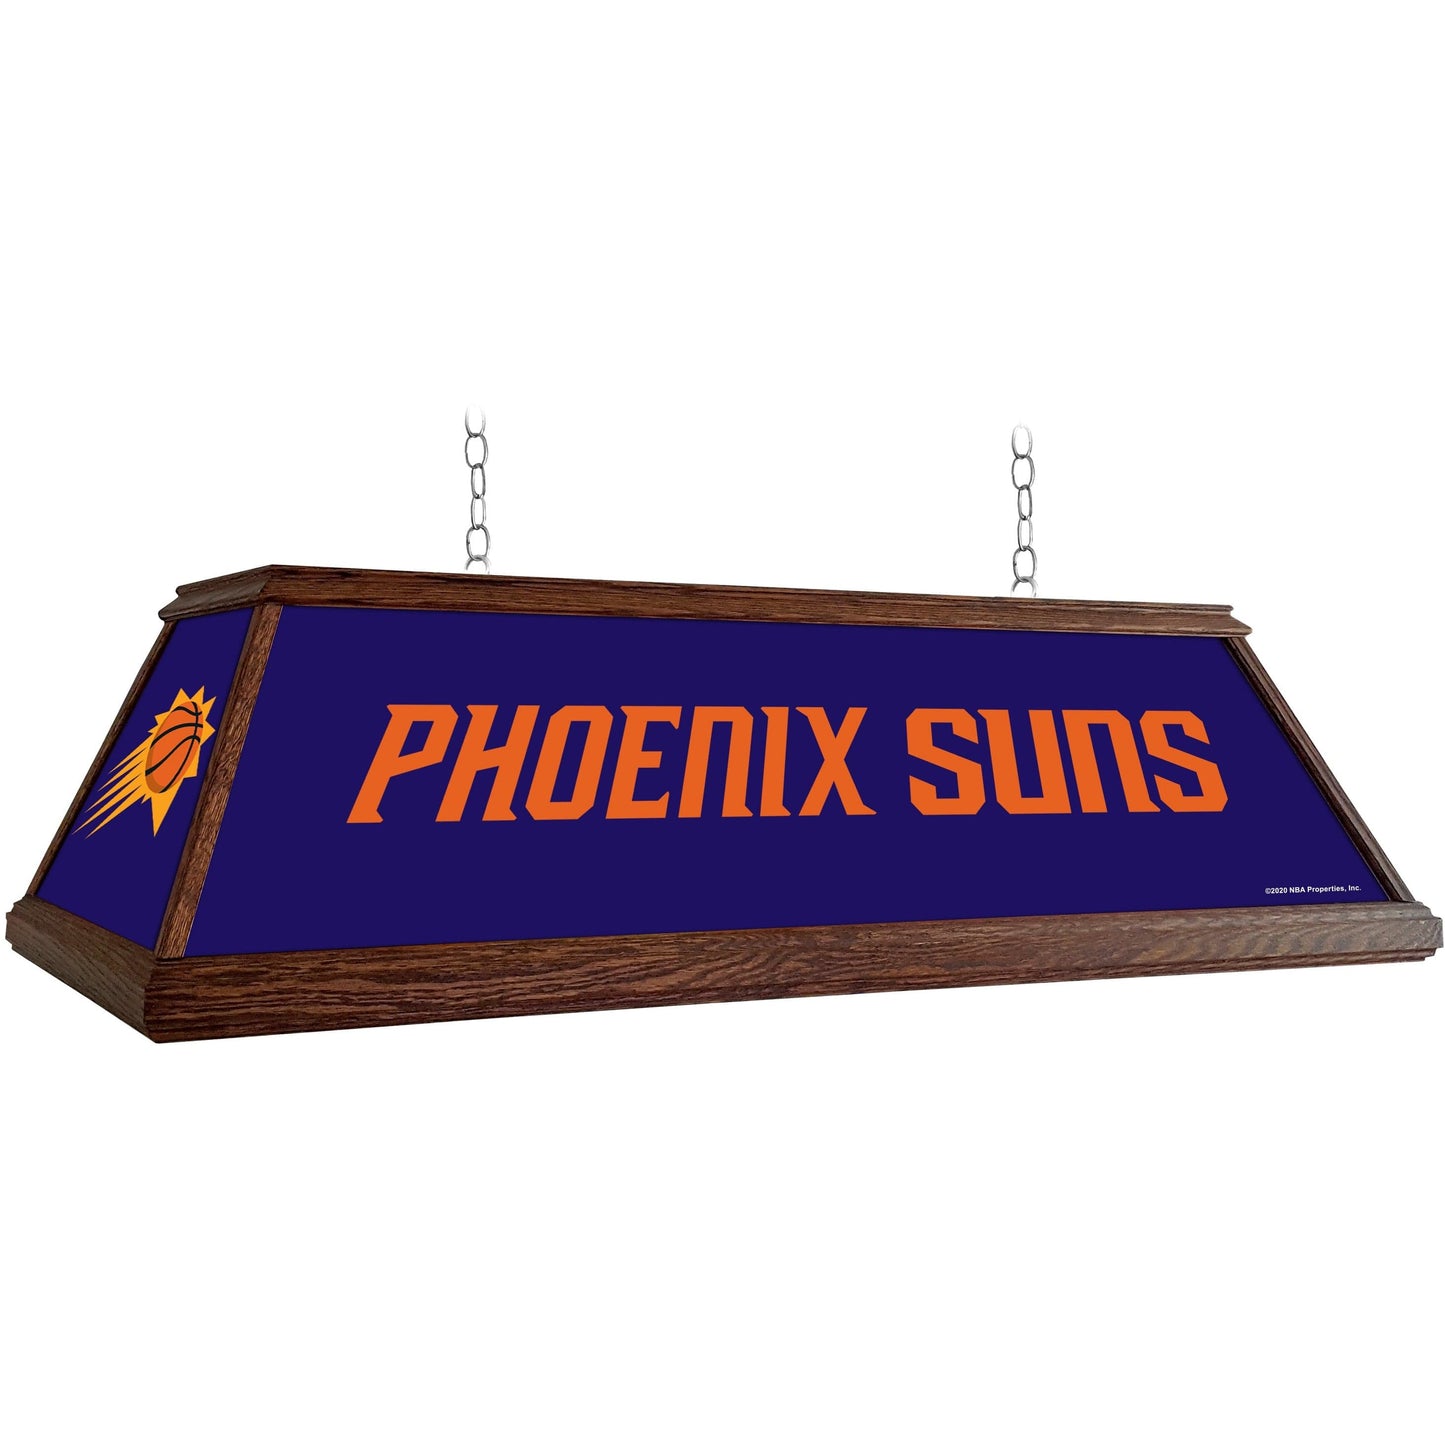 Phoenix Suns: Premium Wood Pool Table Light - The Fan-Brand